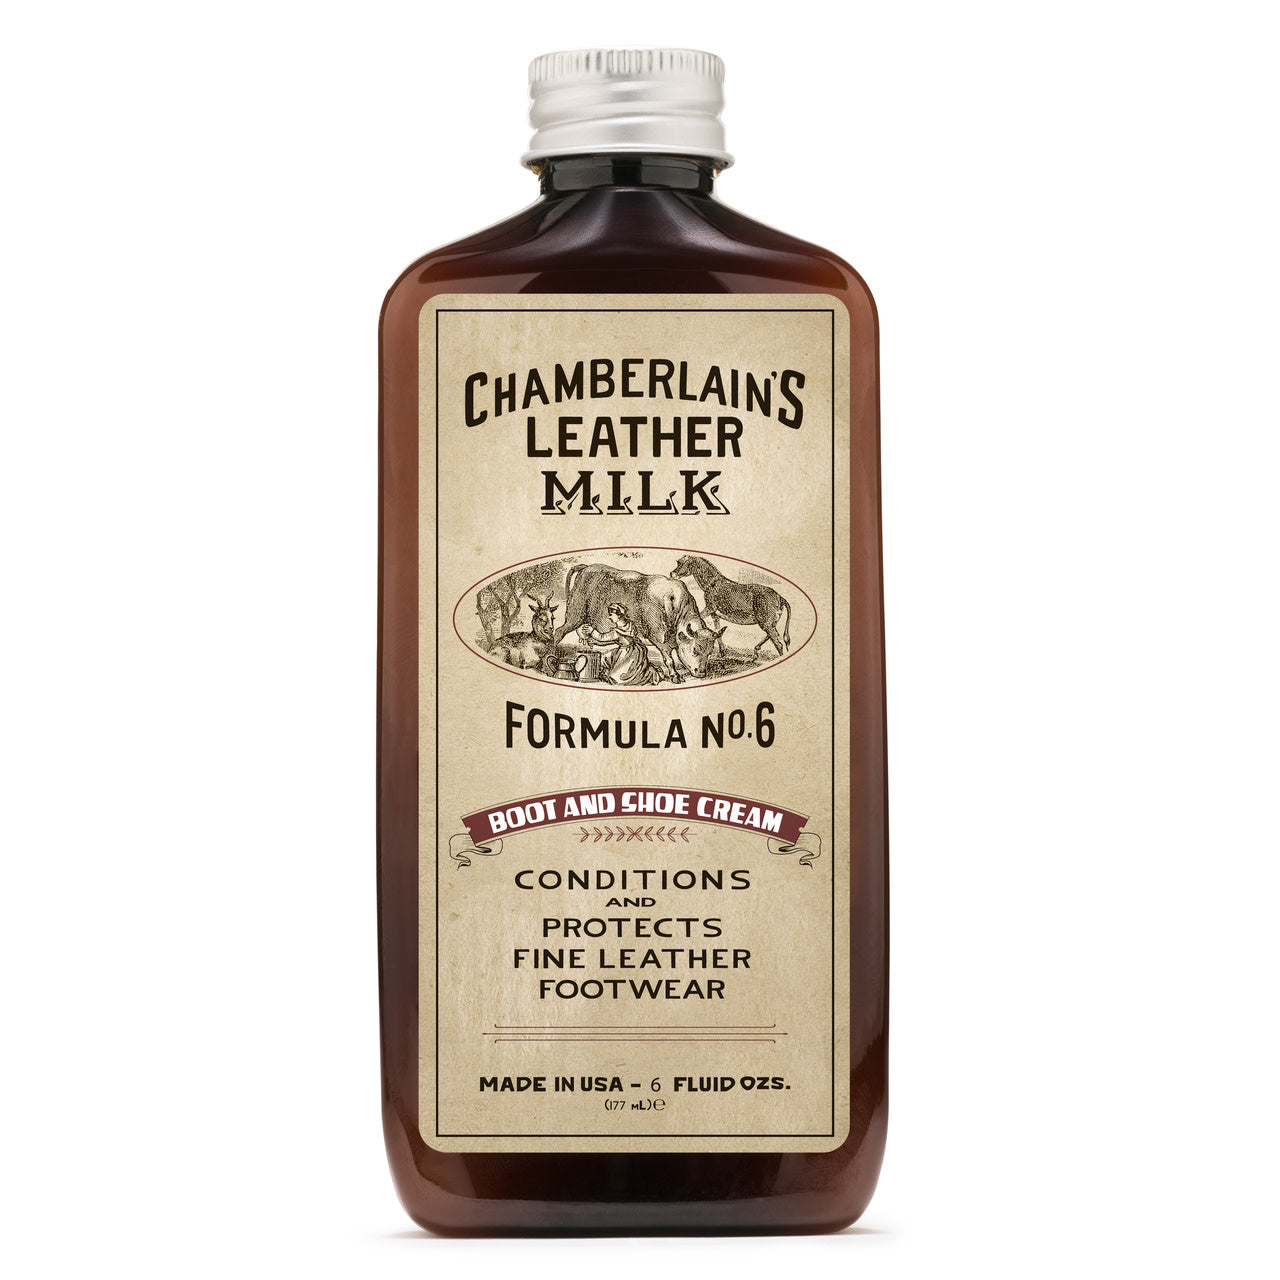 Chamberlain's Leather Milk - Formula No. 6 Boot and Shoe Cream 6 Oz